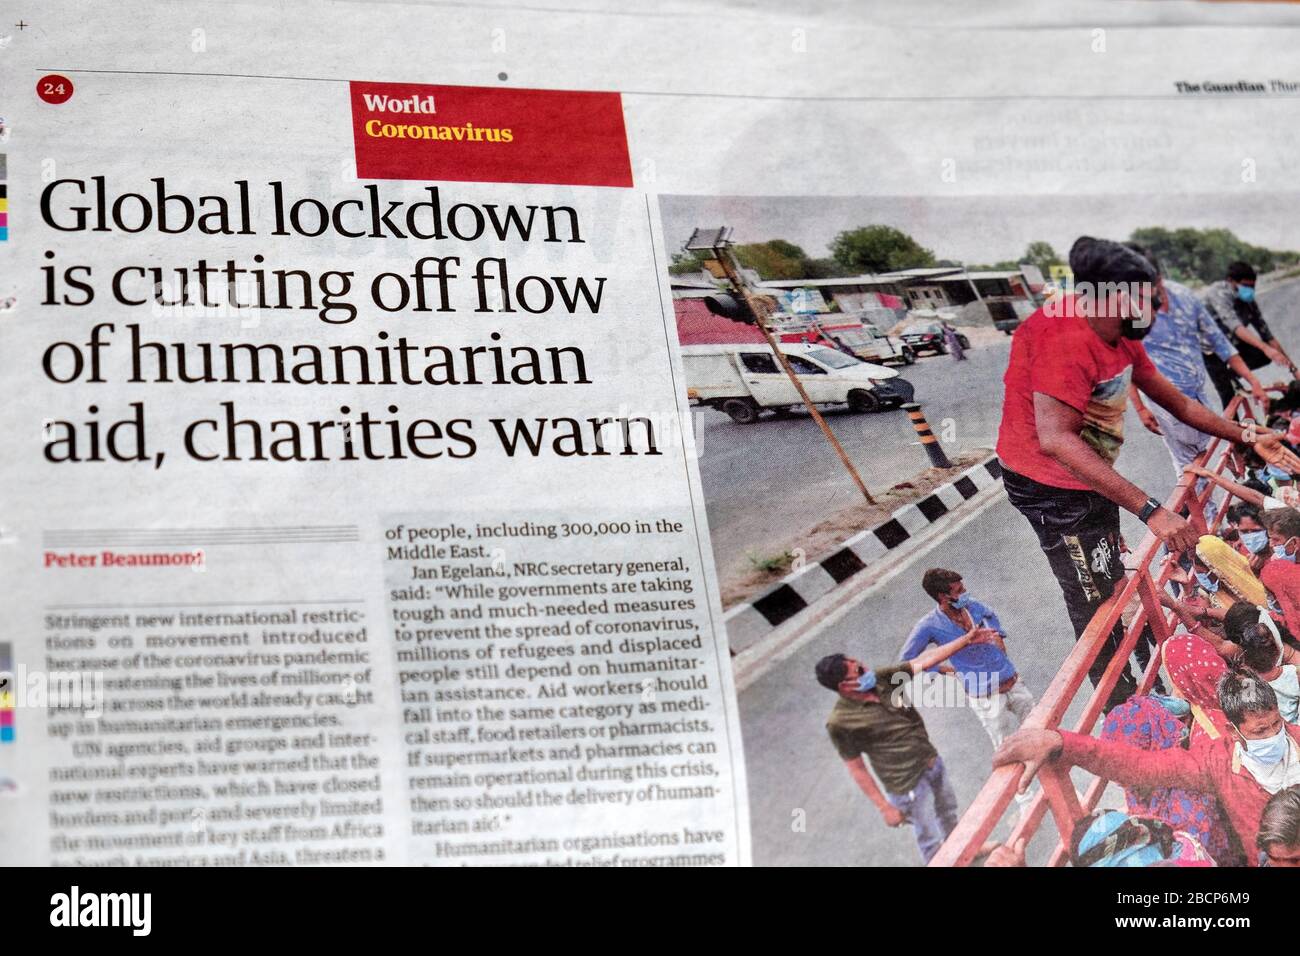 'Global lockdown is cutting off flow of humanitarian aid, charities warn'  Coronavirus article inside page Guardian newspaper March 2020 London UK Stock Photo